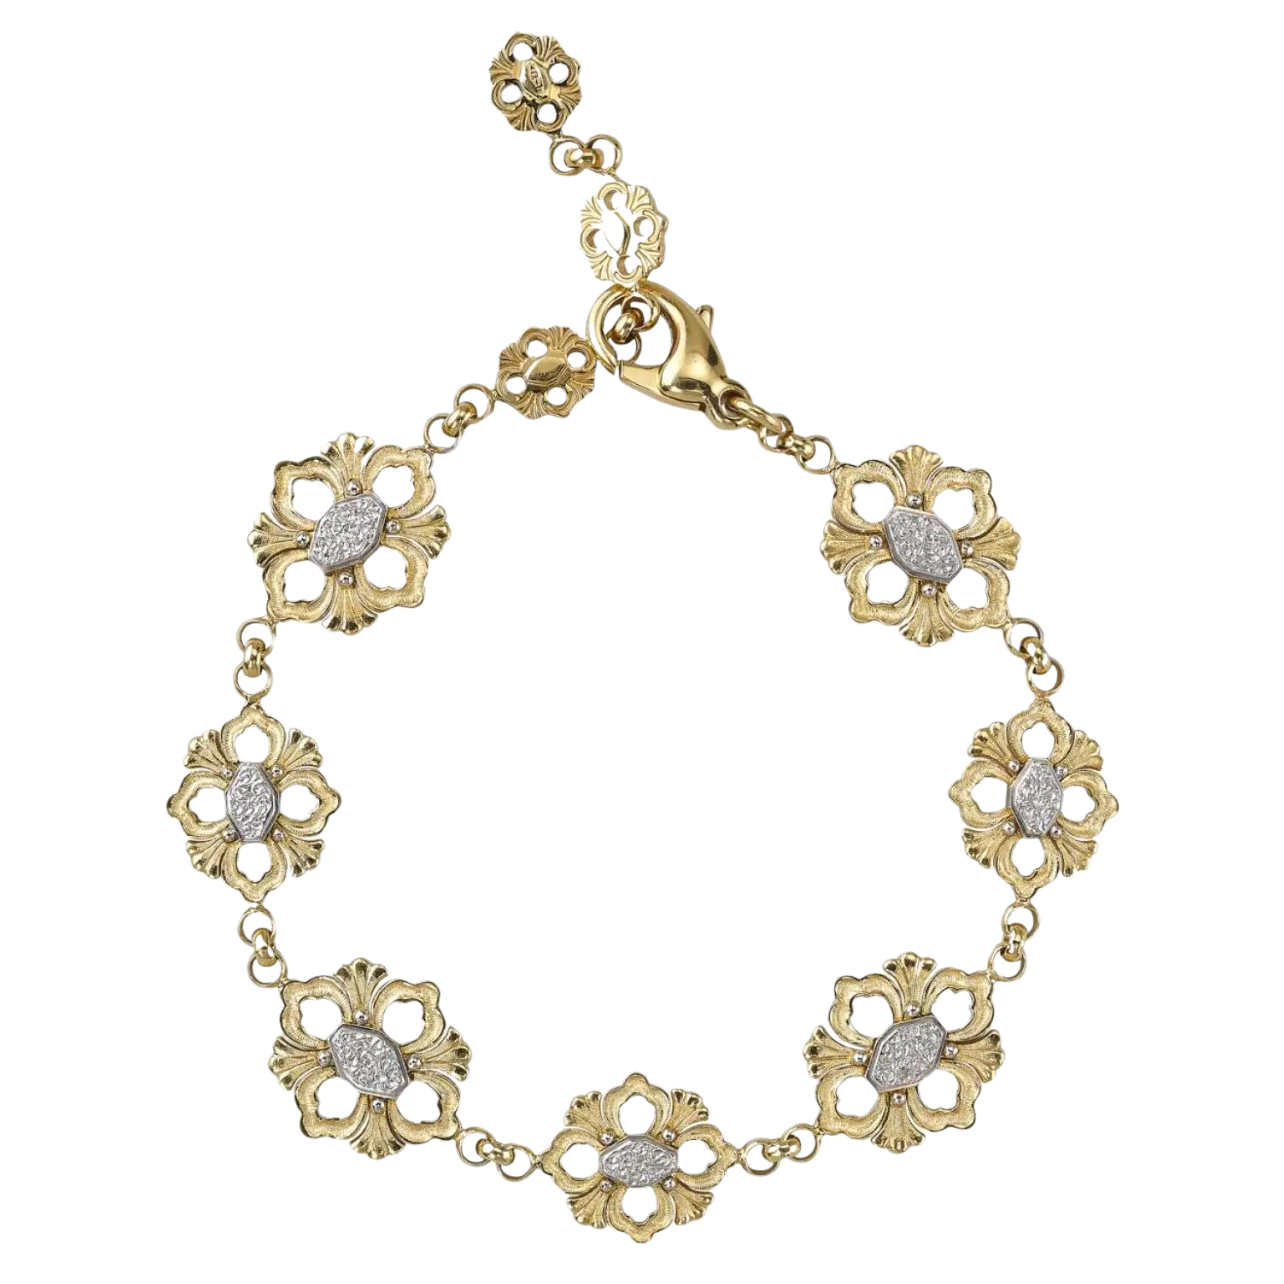 Buccellati Opera Bracelet in white and yellow gold with diamonds